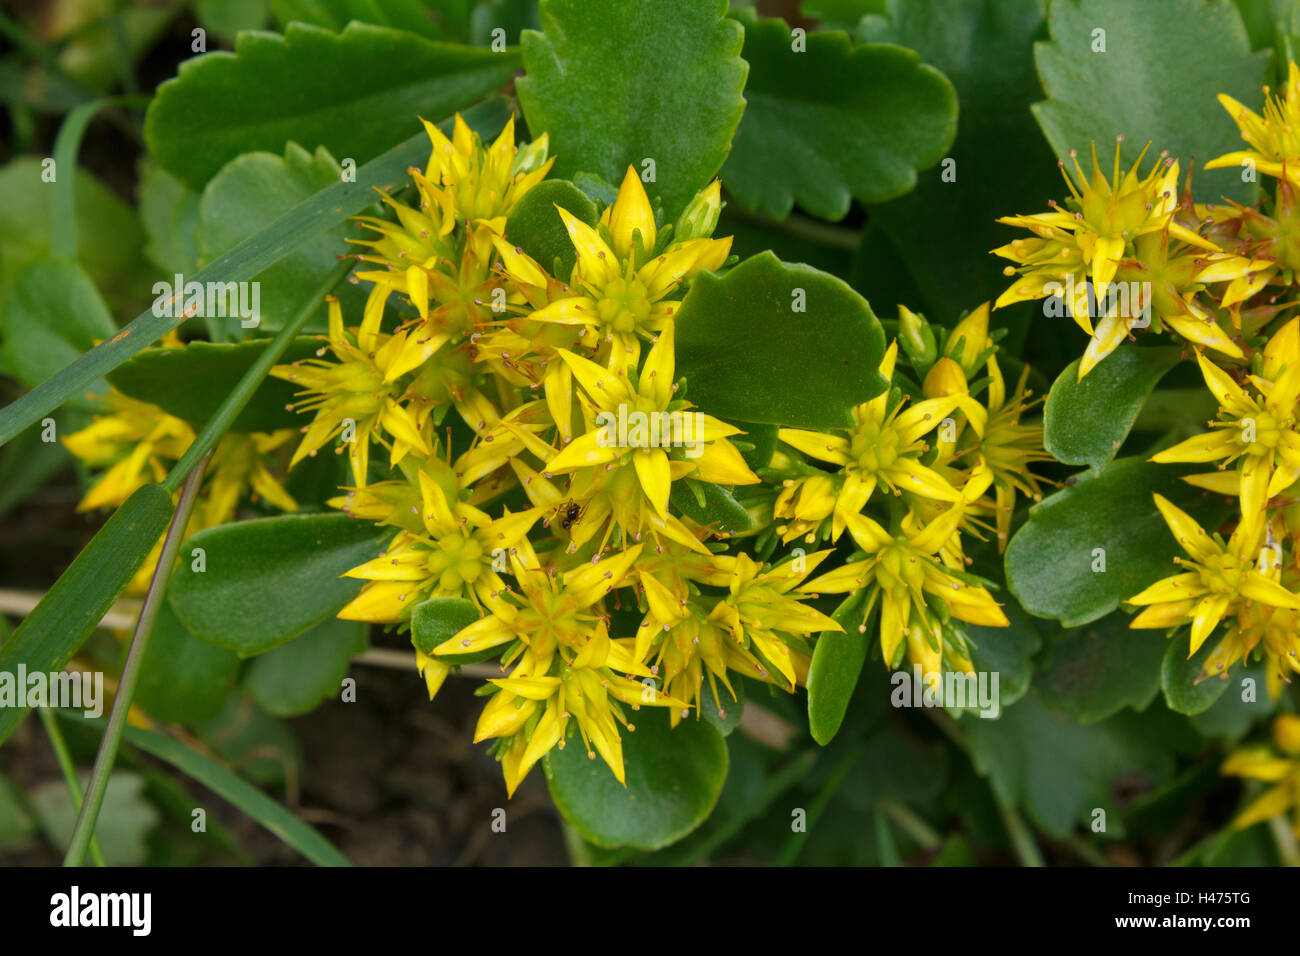 Sedum kamtschaticum - Golden Carpet Stock Photo - Alamy